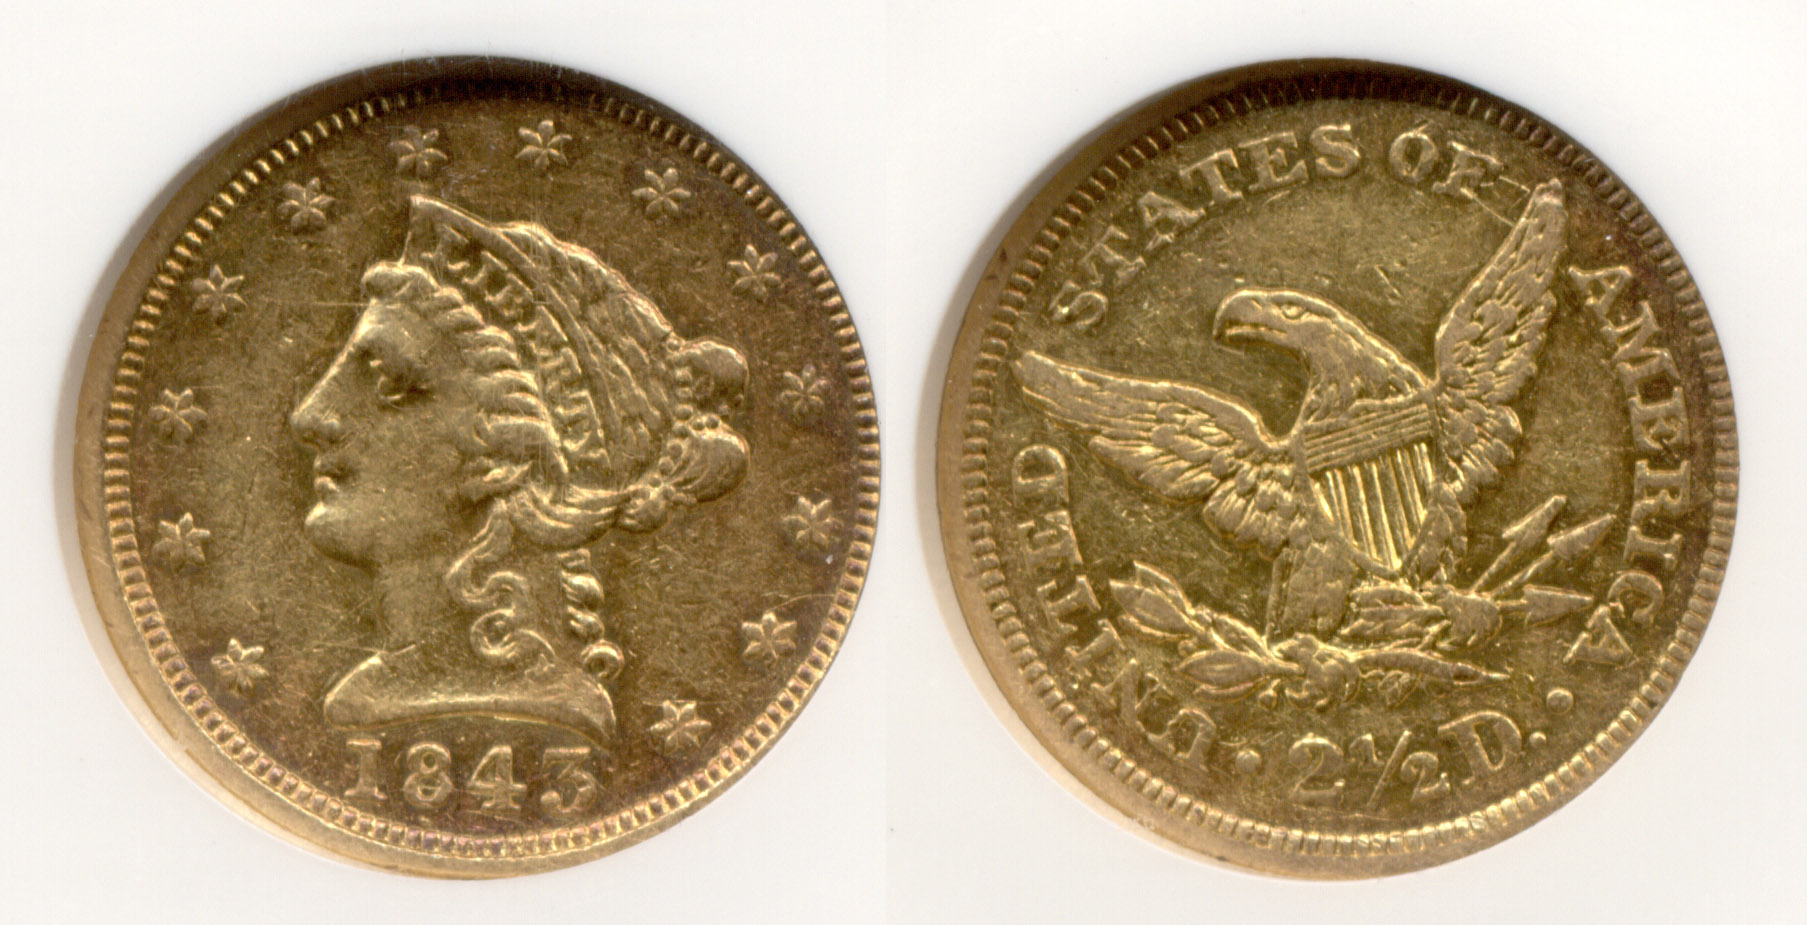 1843 Gold $2.50 Quarter Eagle NGC AU-50